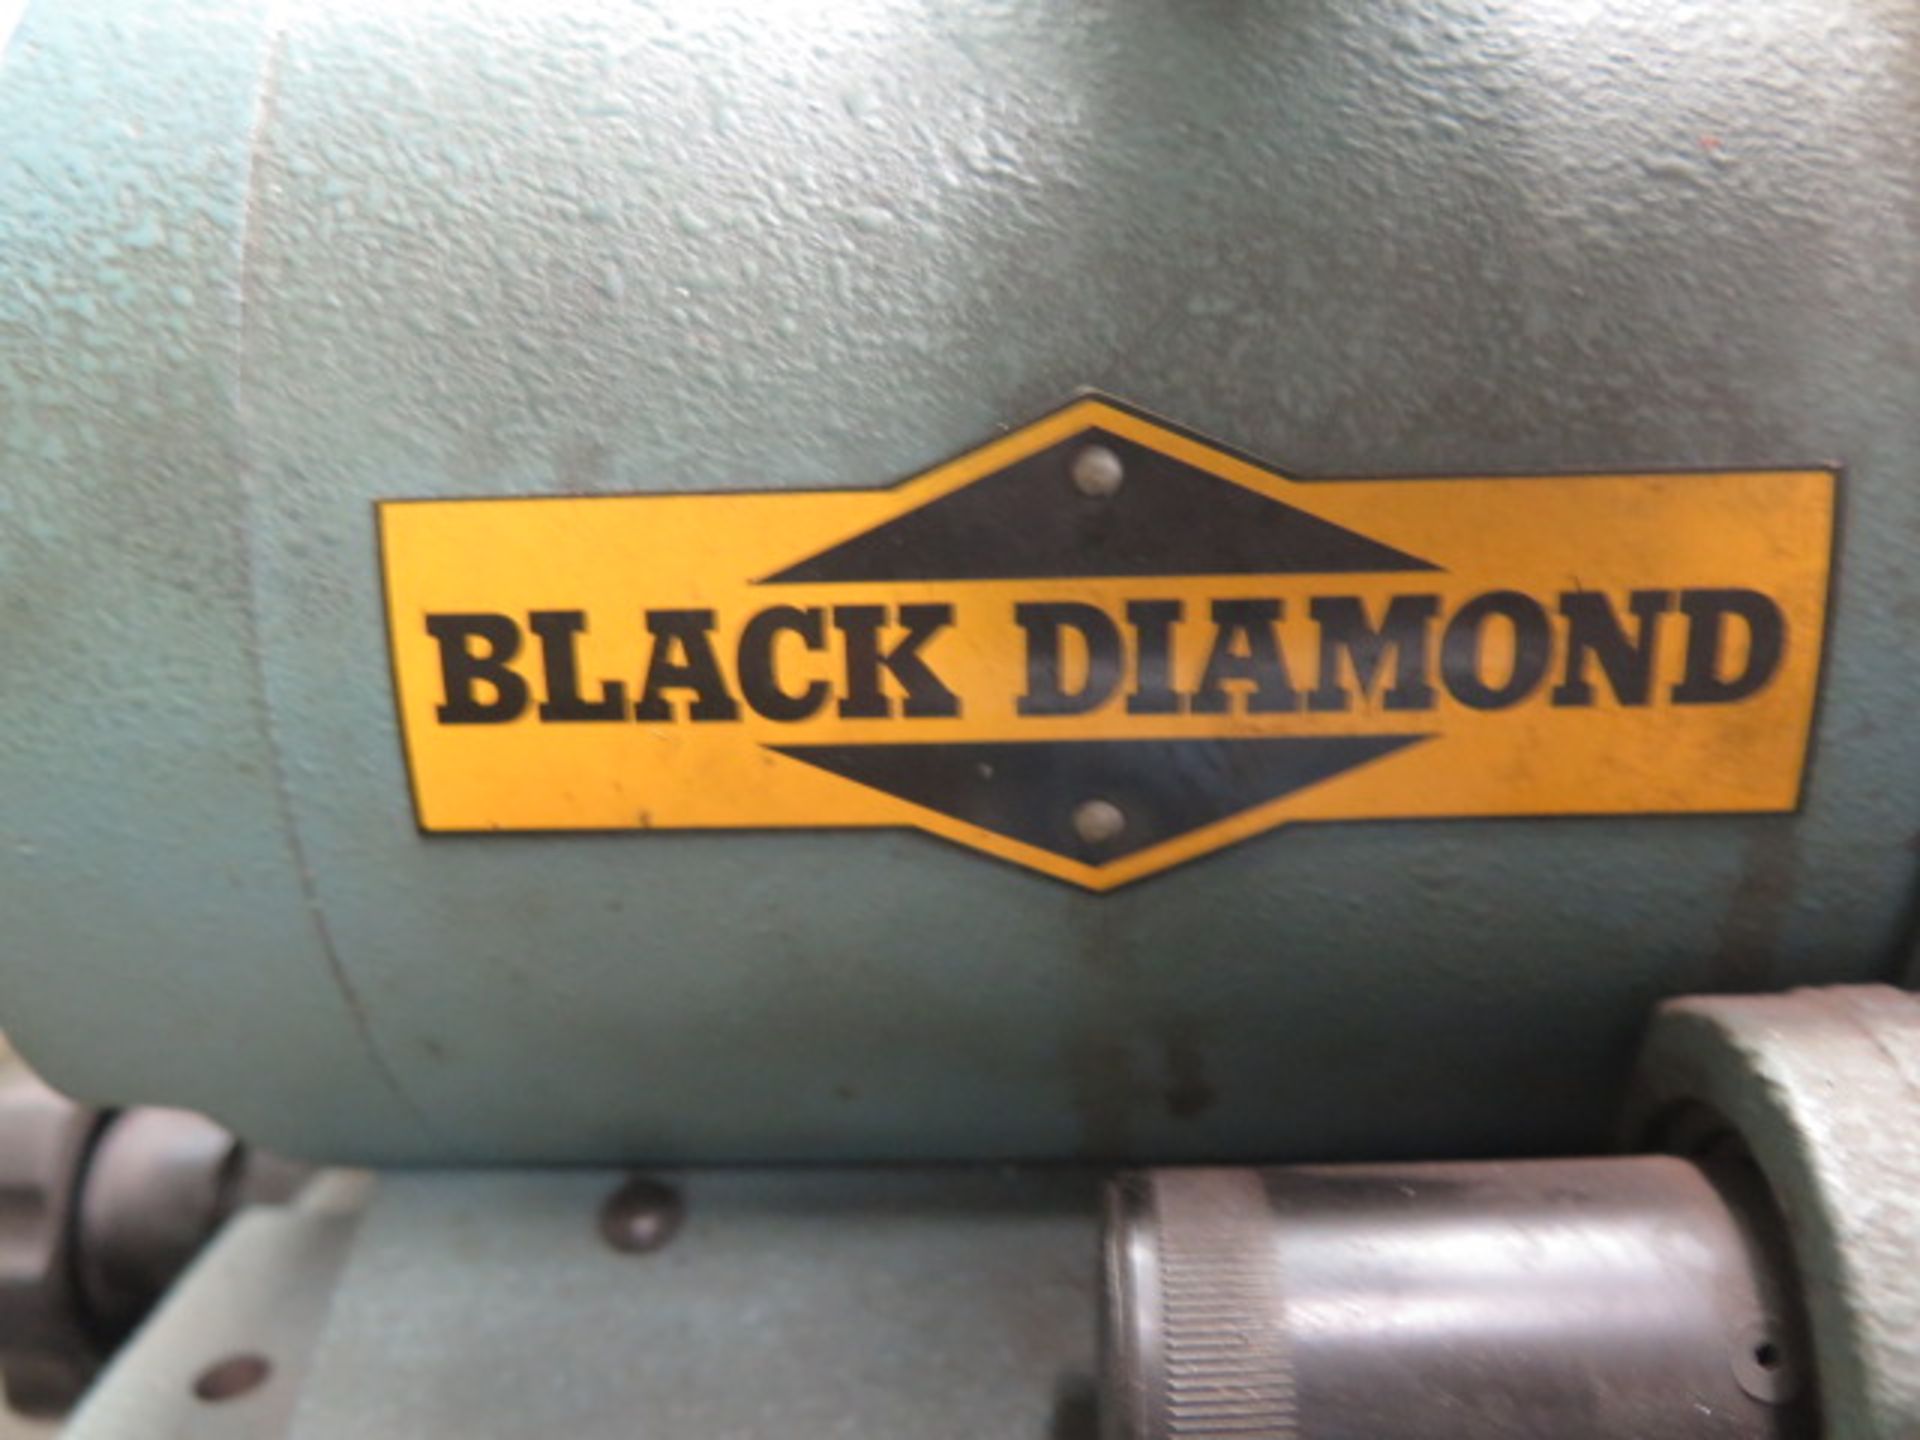 Black Diamond BW-70 Precision Drill Sharpener s/n 25682 w/ 70-11/32” Range, Collets, Stand - Image 7 of 7